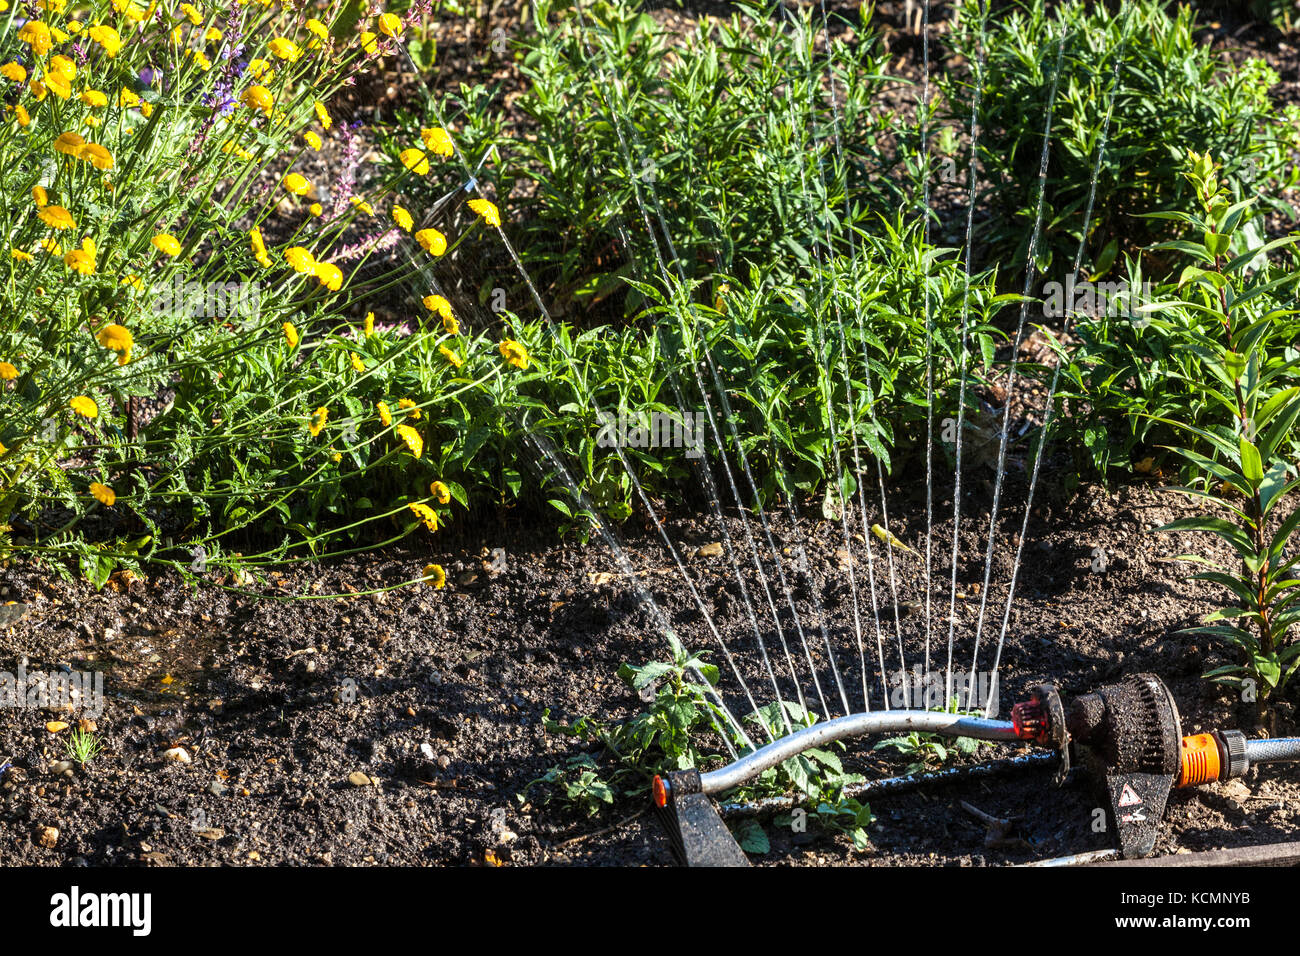 Water sprinkler irrigating a garden Stock Photo